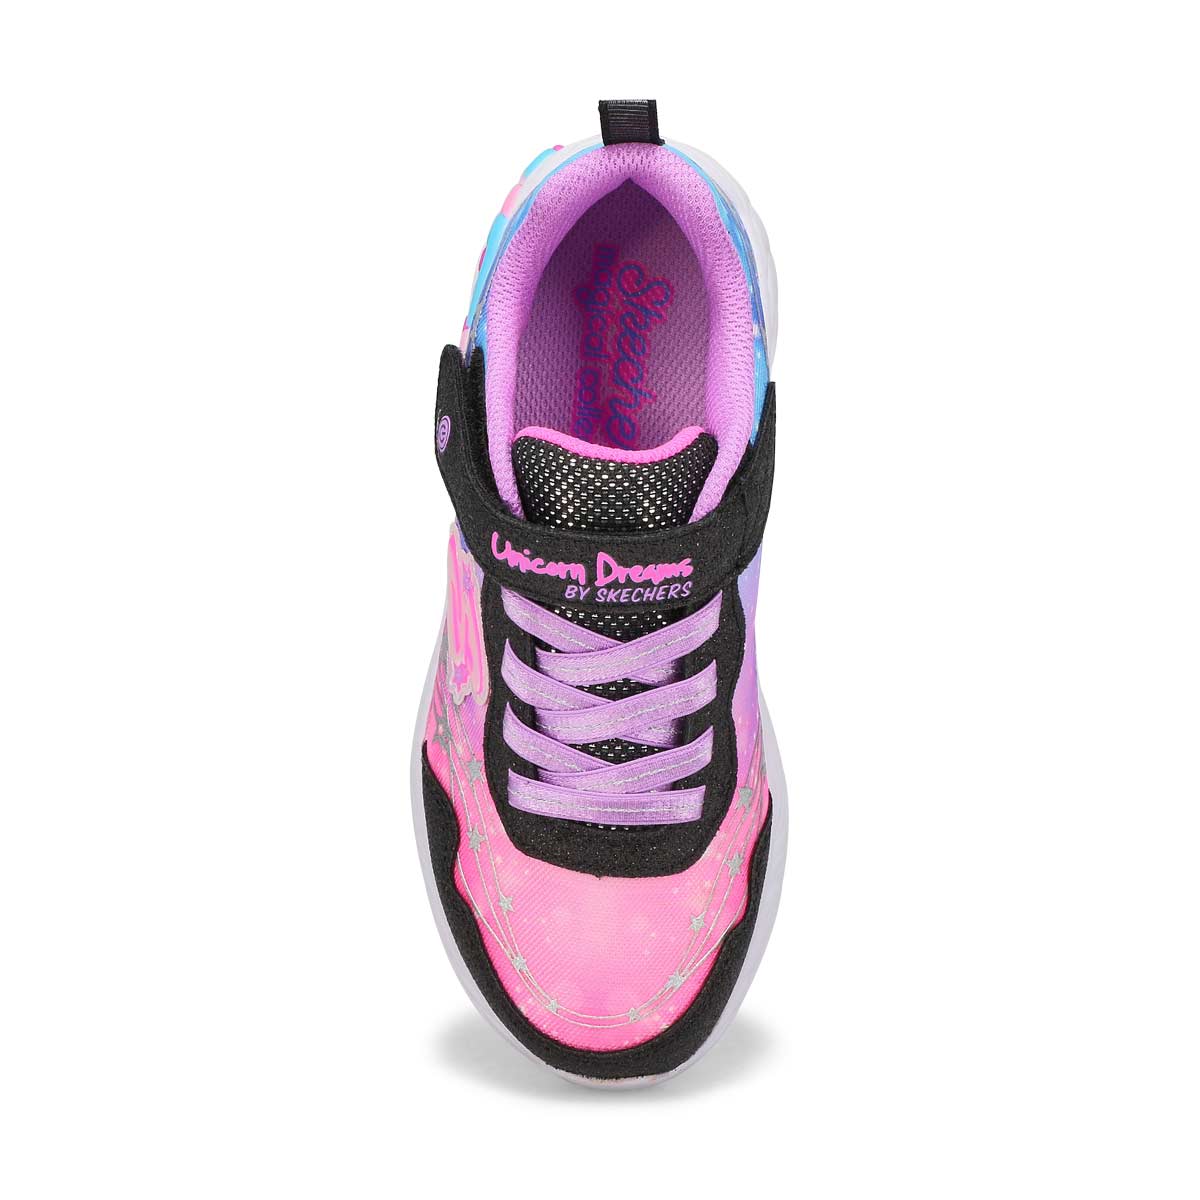 Girls'  S-Lights Unicorn Dreams Light Up Sneaker - Black/Multi